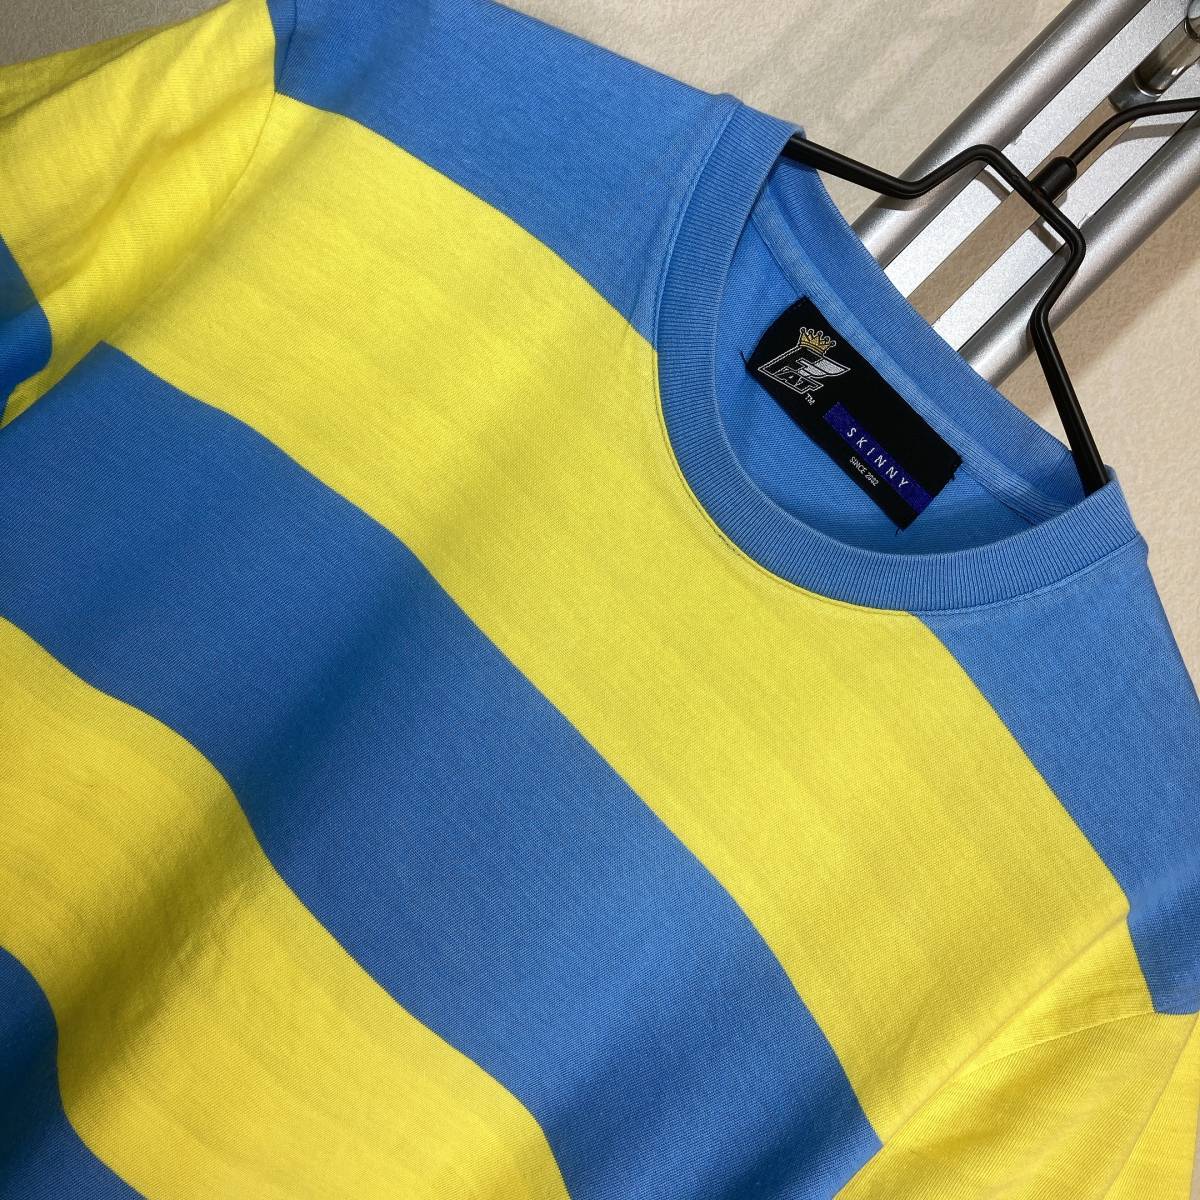 V634#FAT* бледно-голубой * желтый окантовка * футболка #SKINNY